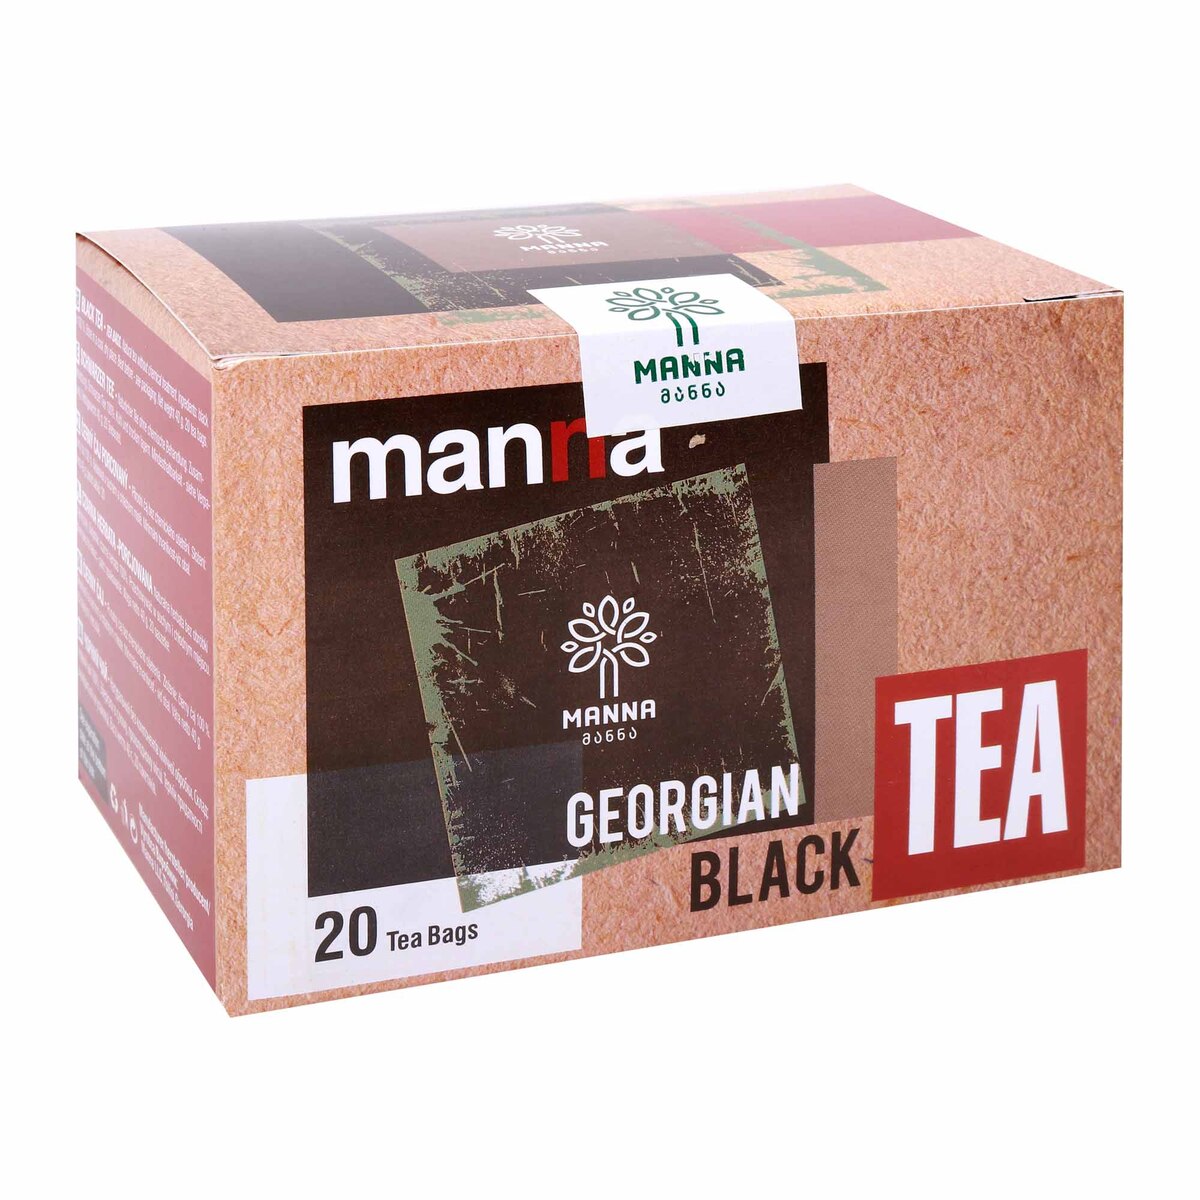 Manna Georgian Black Tea Bag, 20 Bags